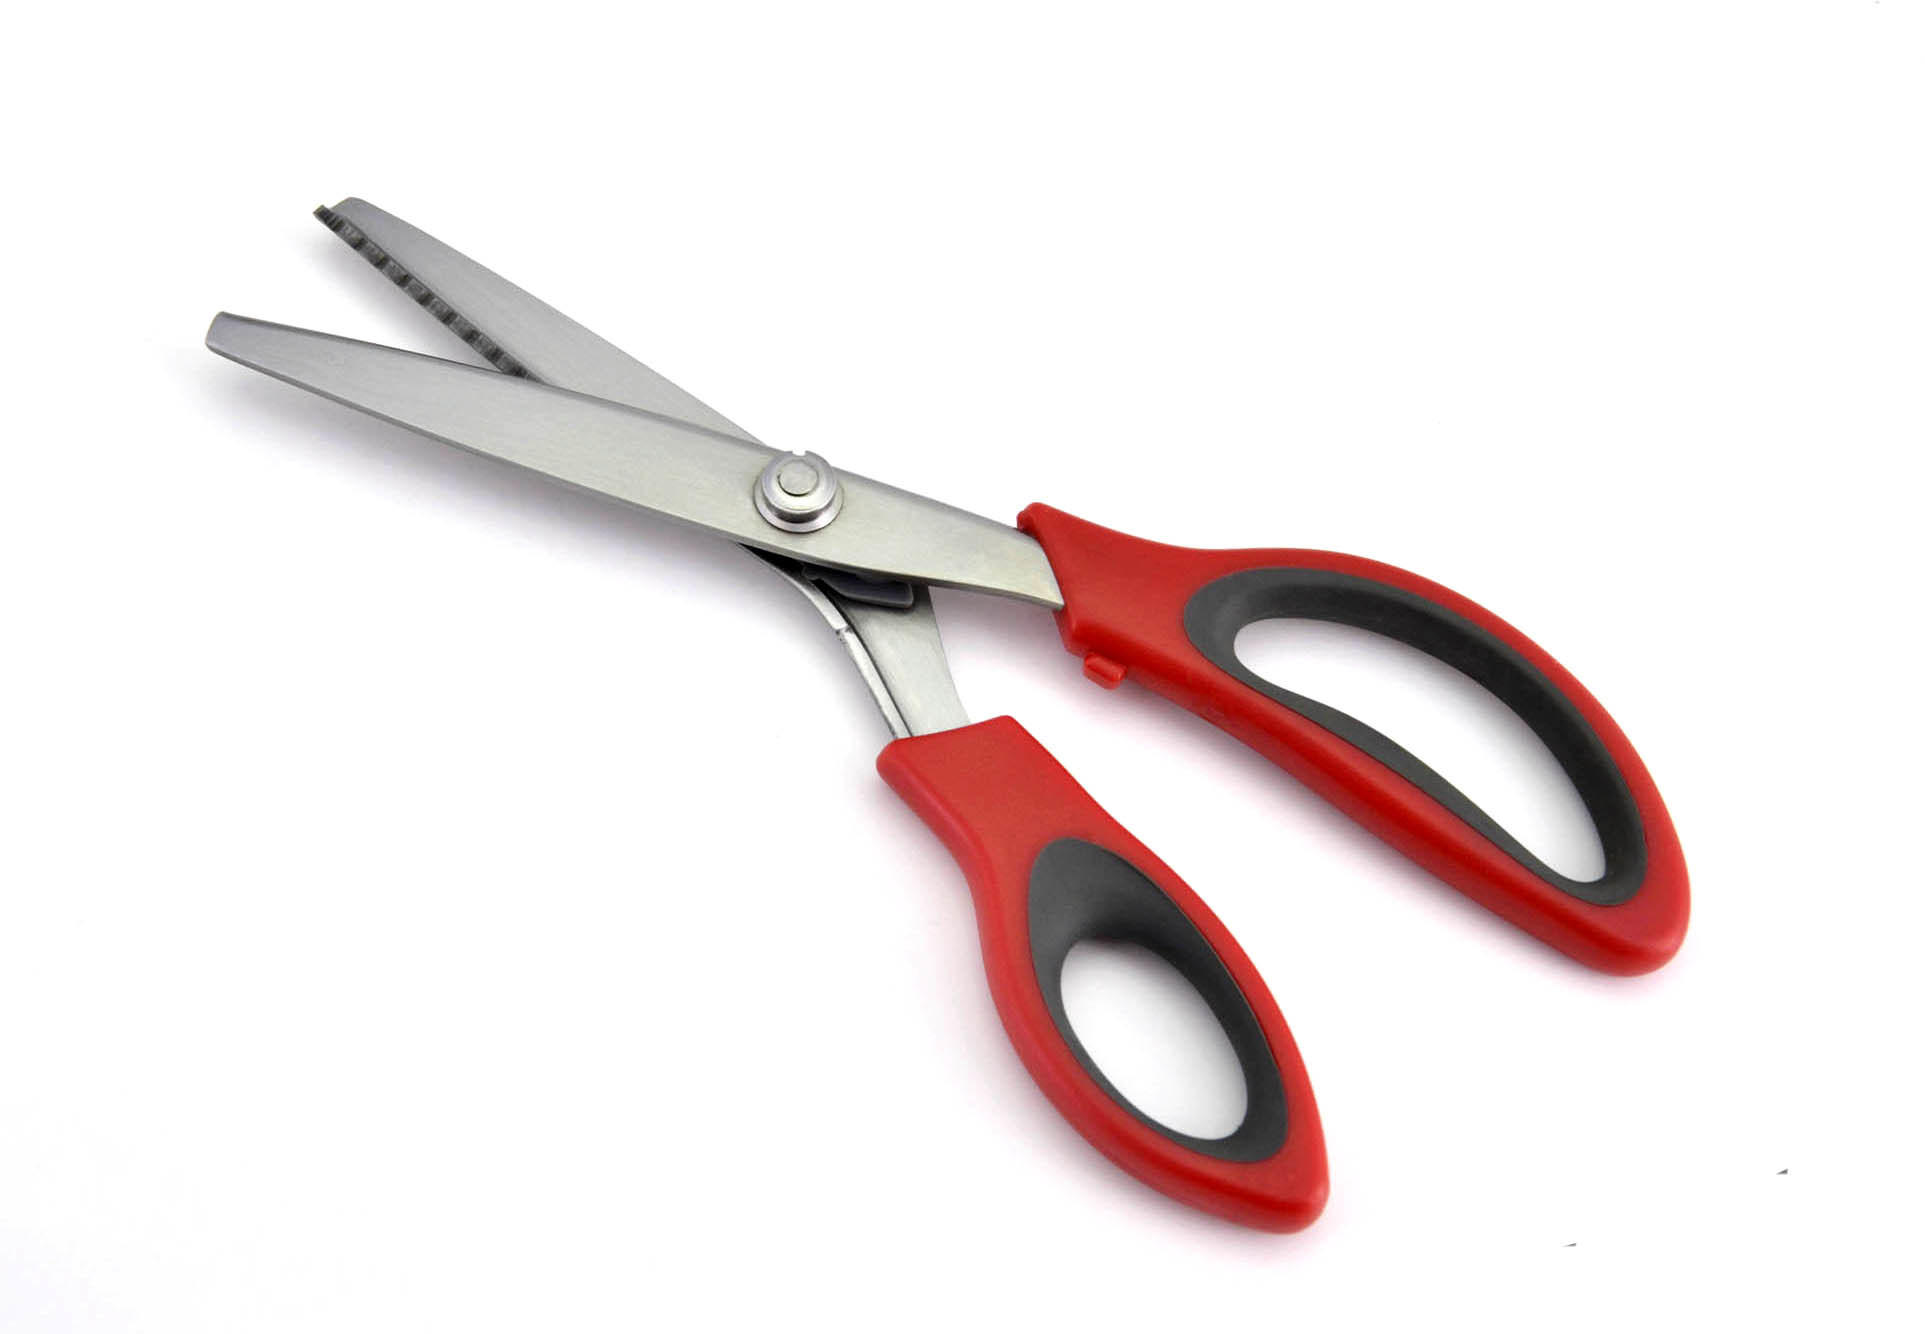 Hardware Power Cutting Tools Craft Pinking Shears Scissors